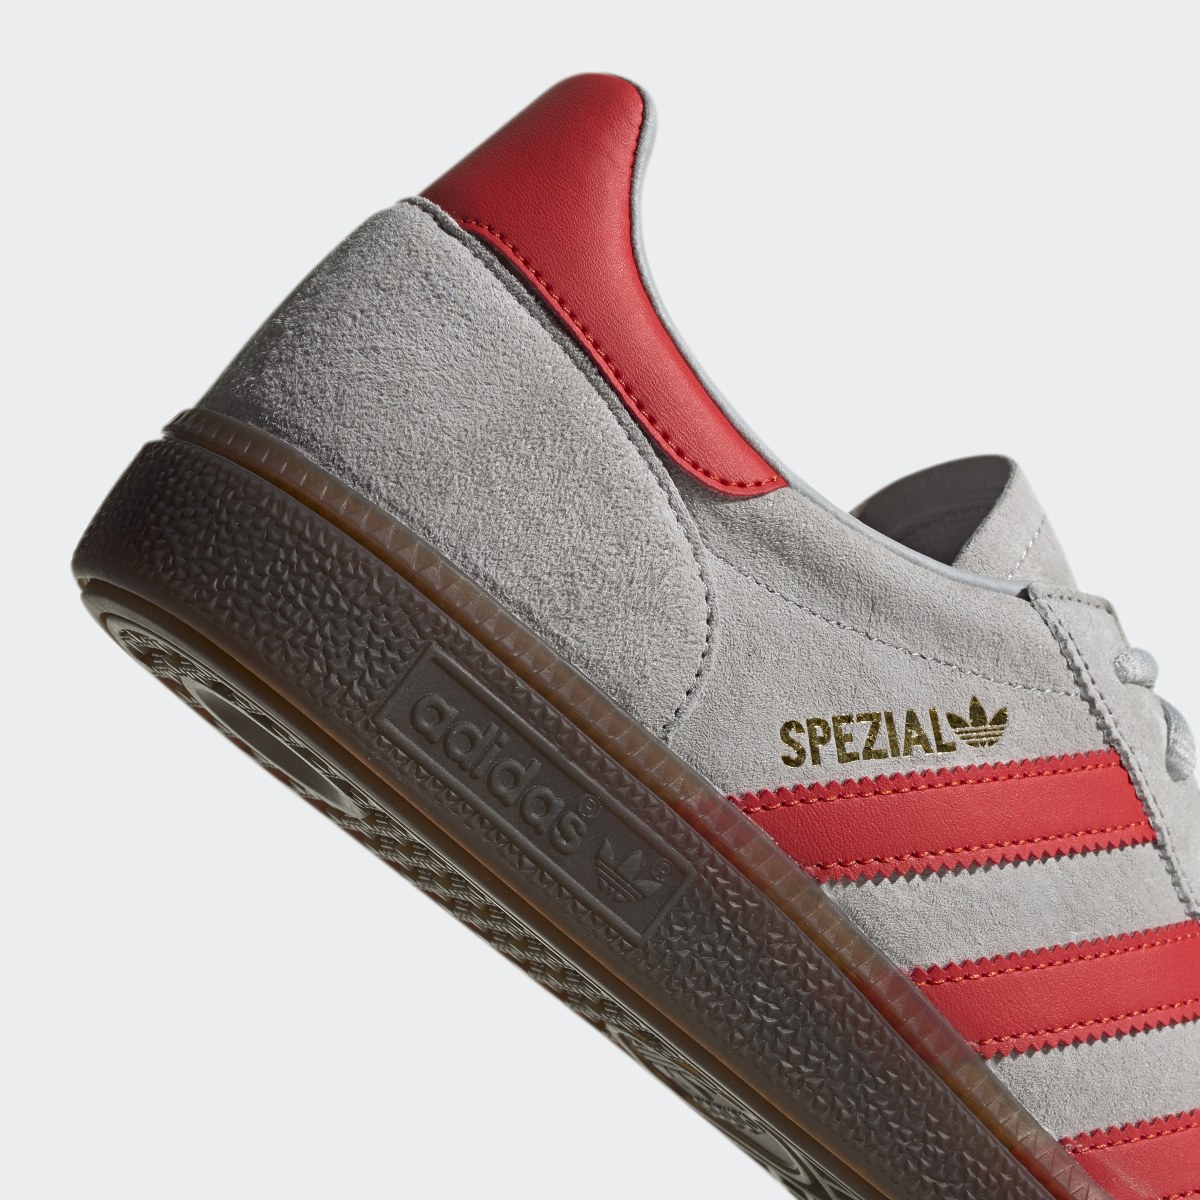 Adidas Handball Spezial Schuh. 11